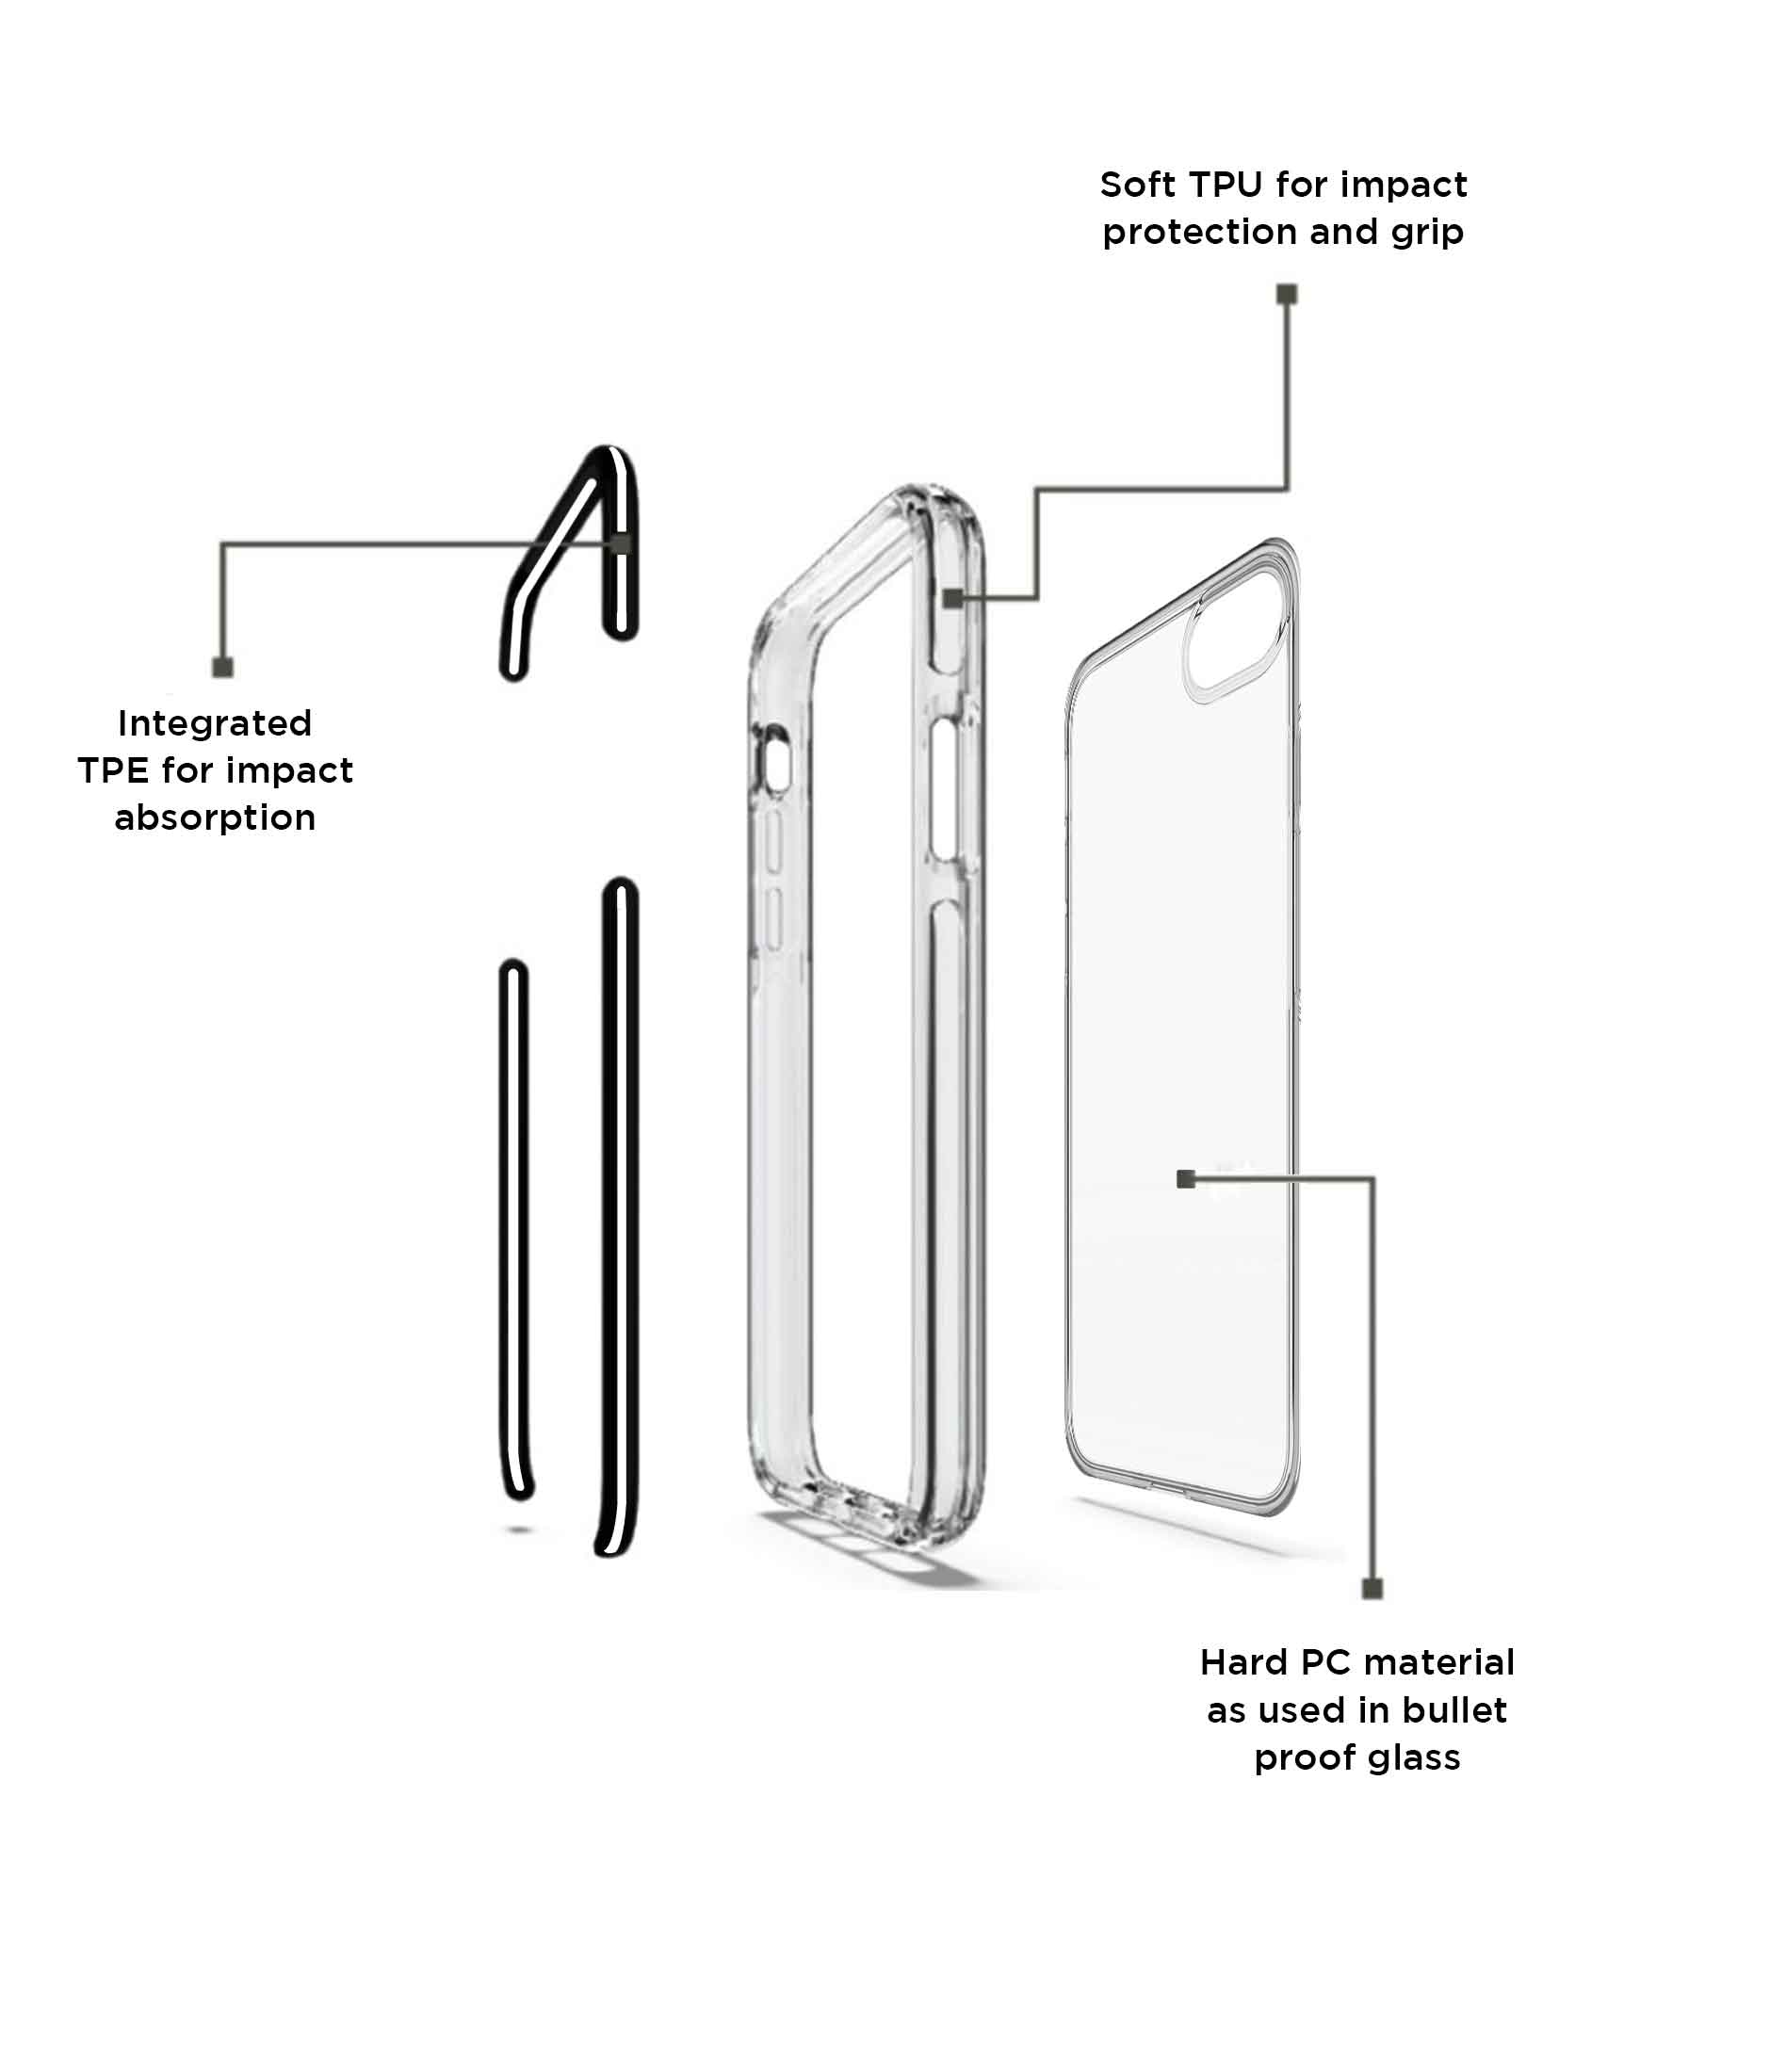 Illuminated Spiderman - Extreme Phone Case for iPhone 6S